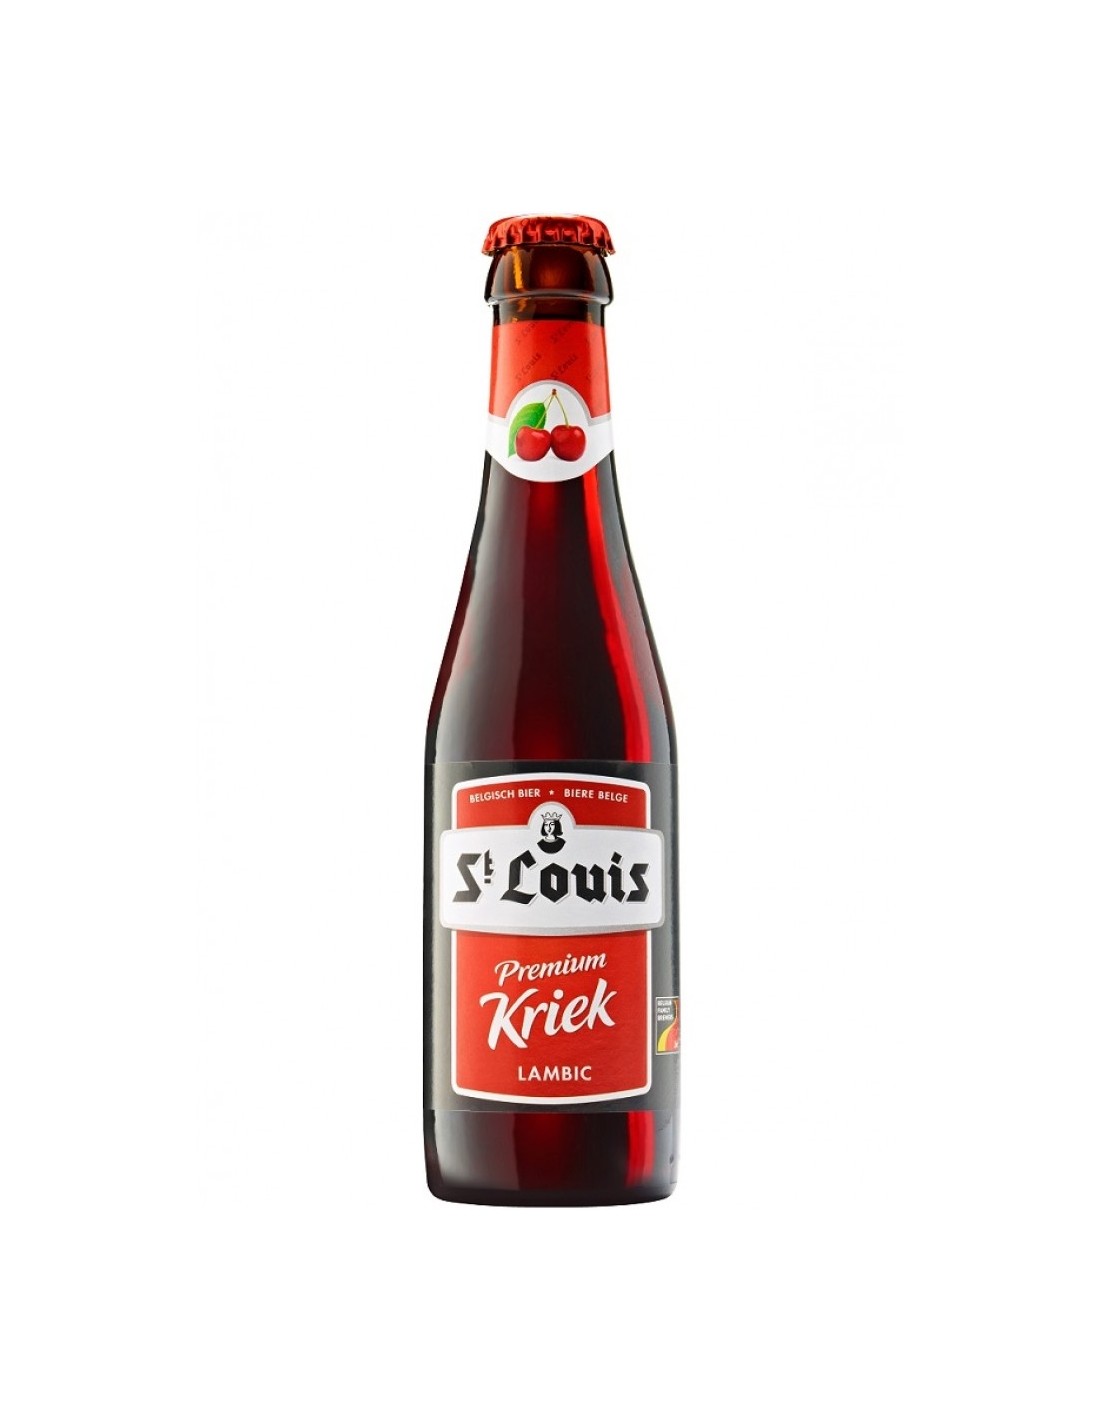 Bere rosie, filtrata St.Louis Premium Kriek, 3.2% alc., 0.25L, Belgia alcooldiscount.ro